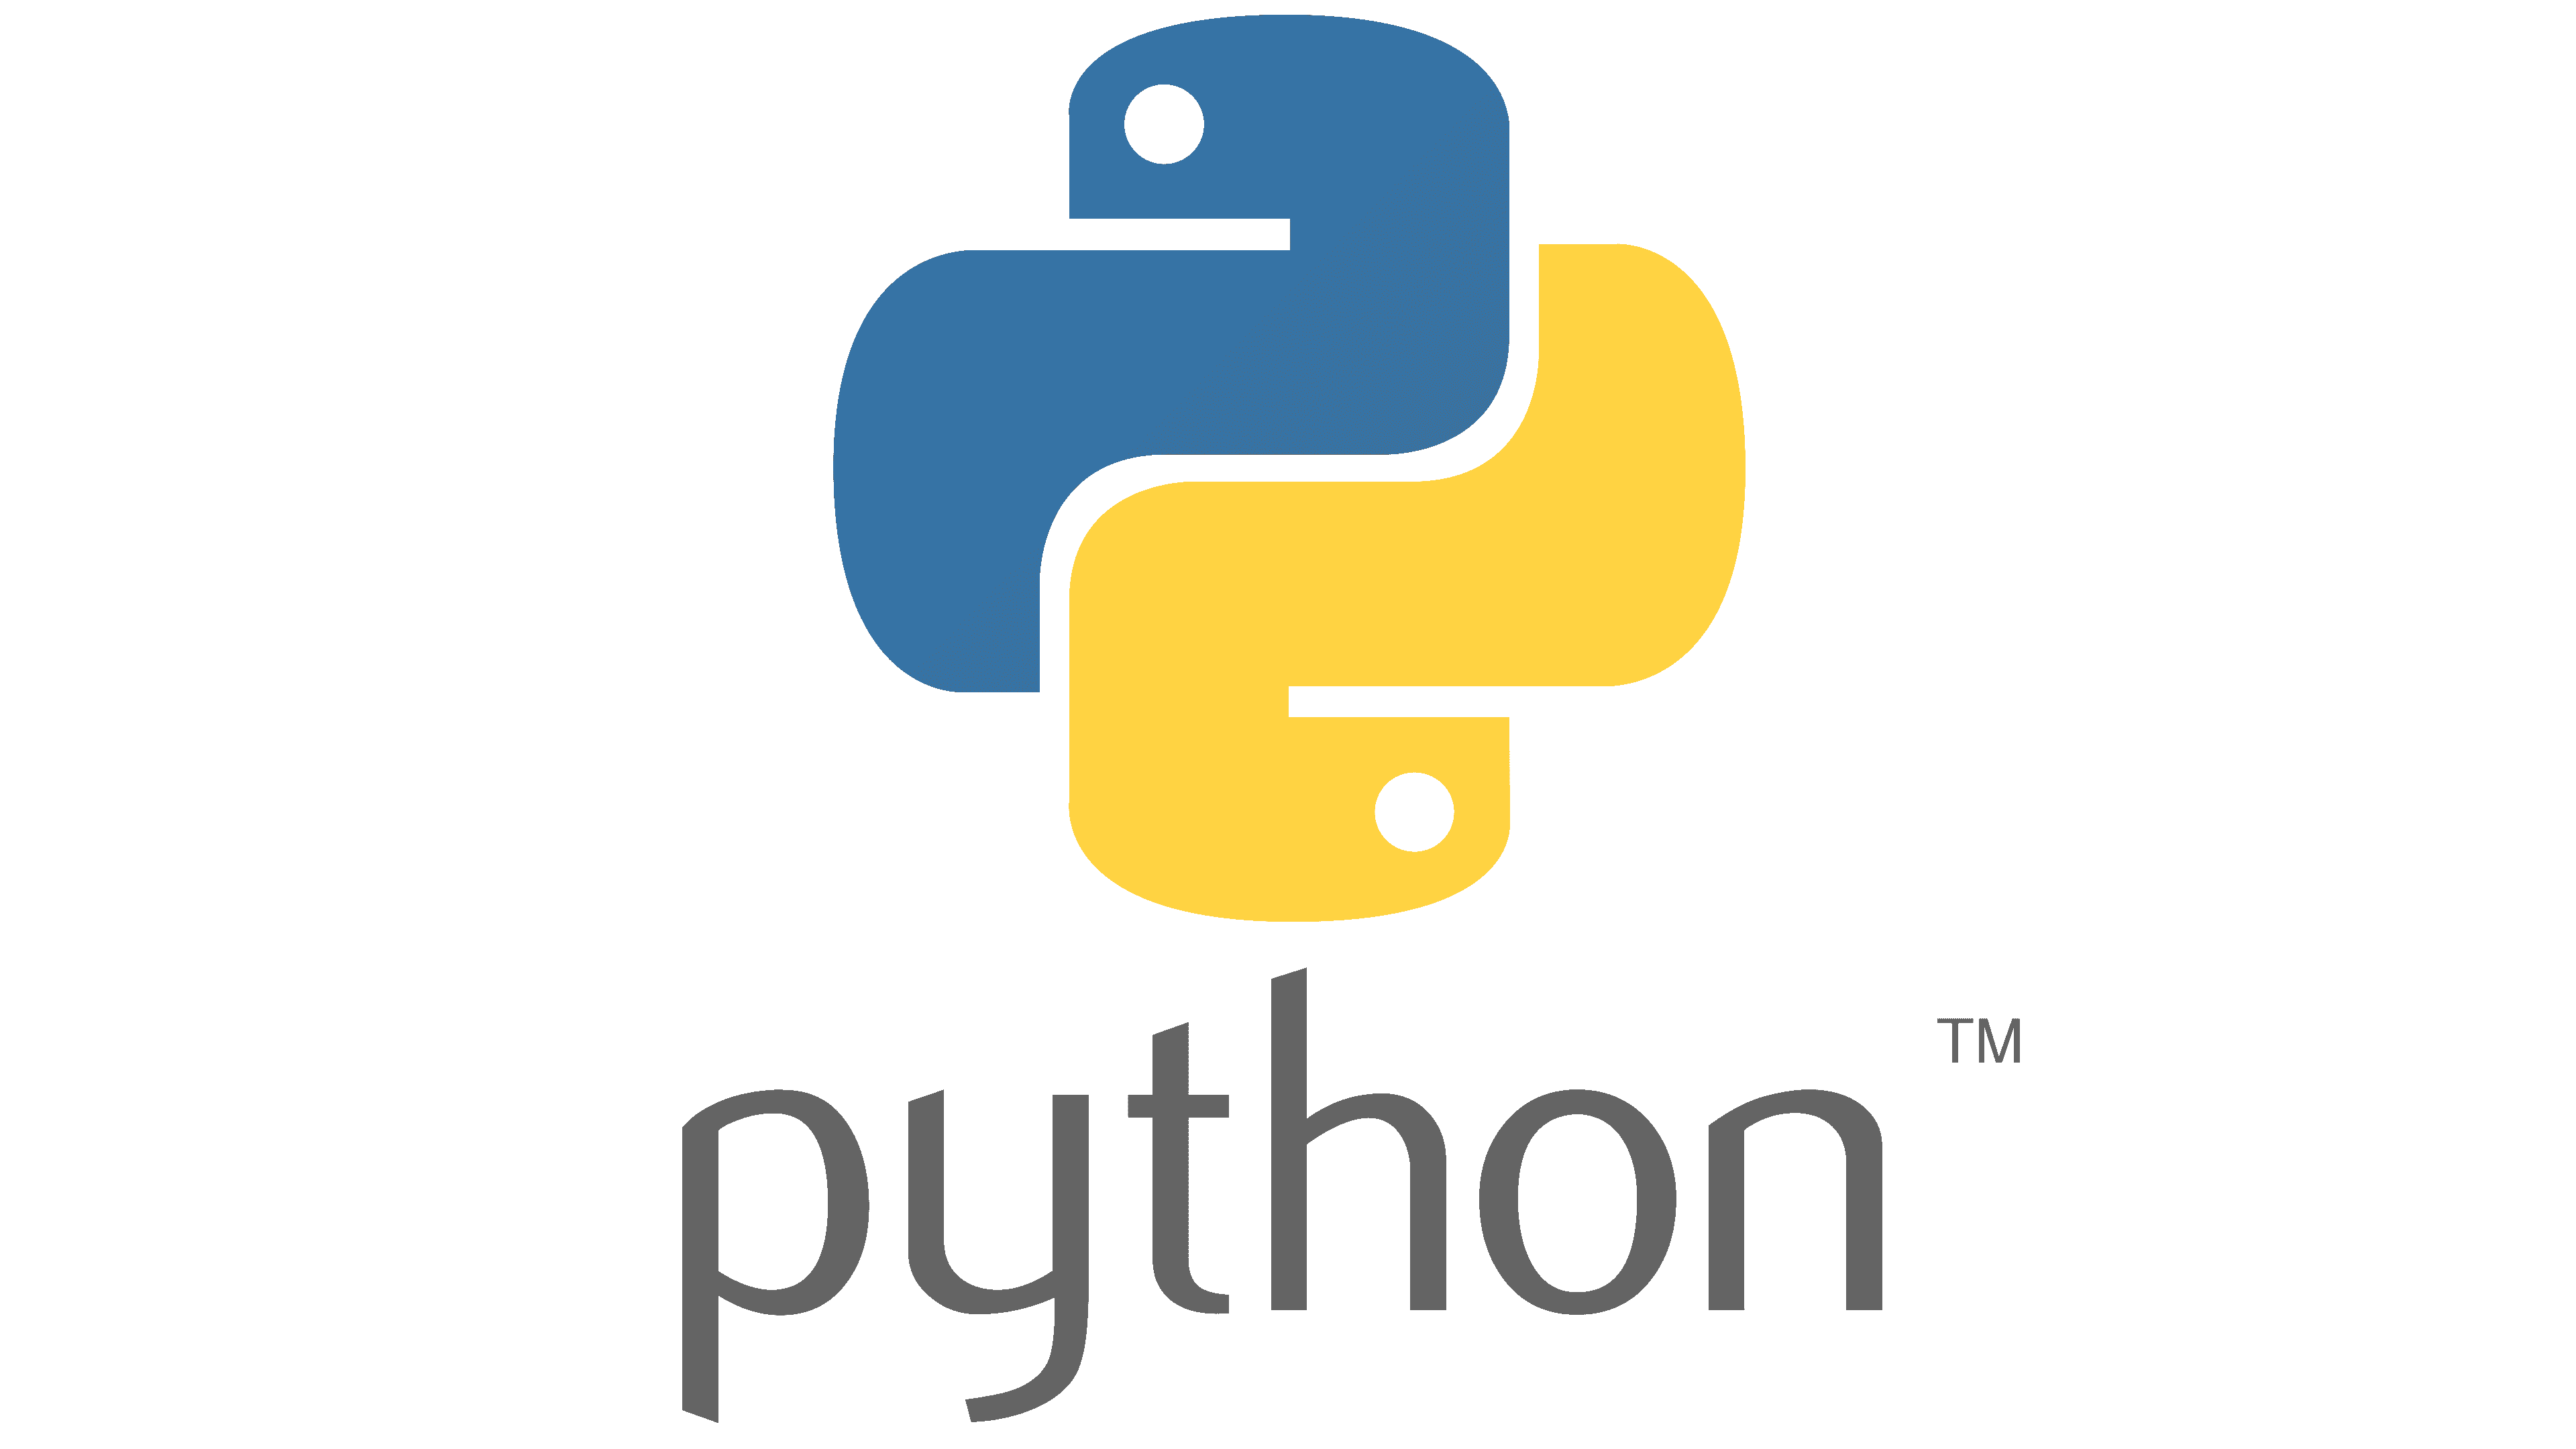 Python-logo